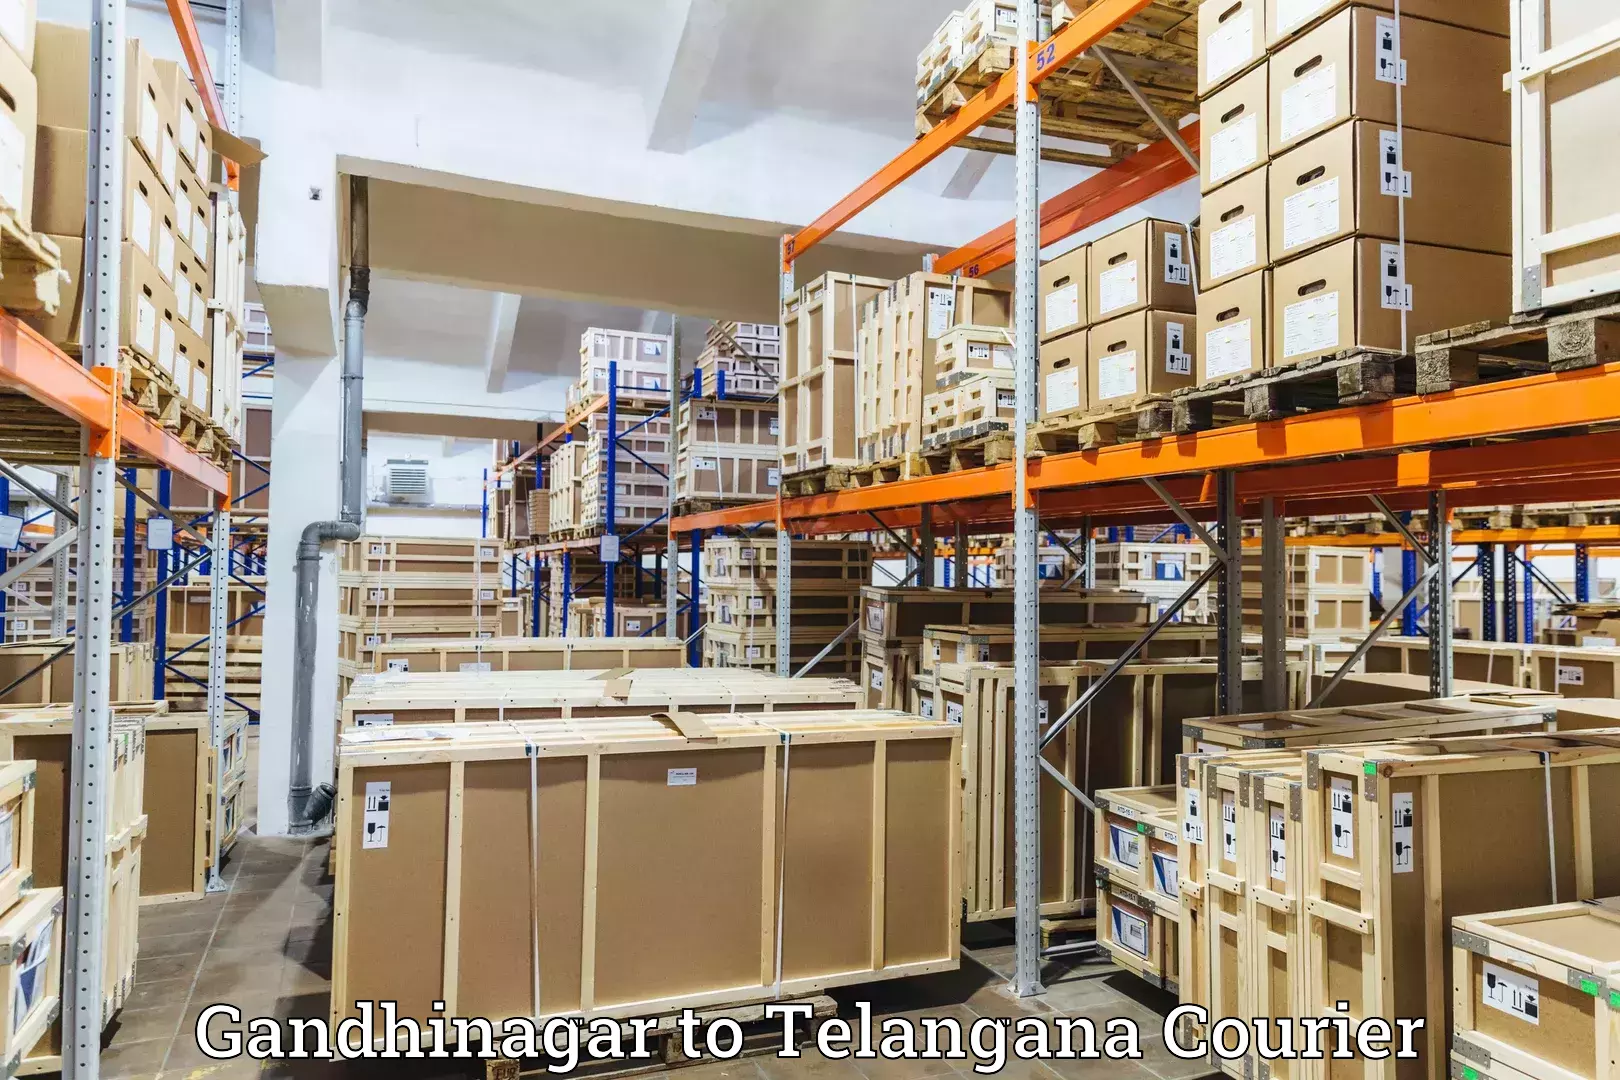 Subscription-based courier Gandhinagar to Telangana